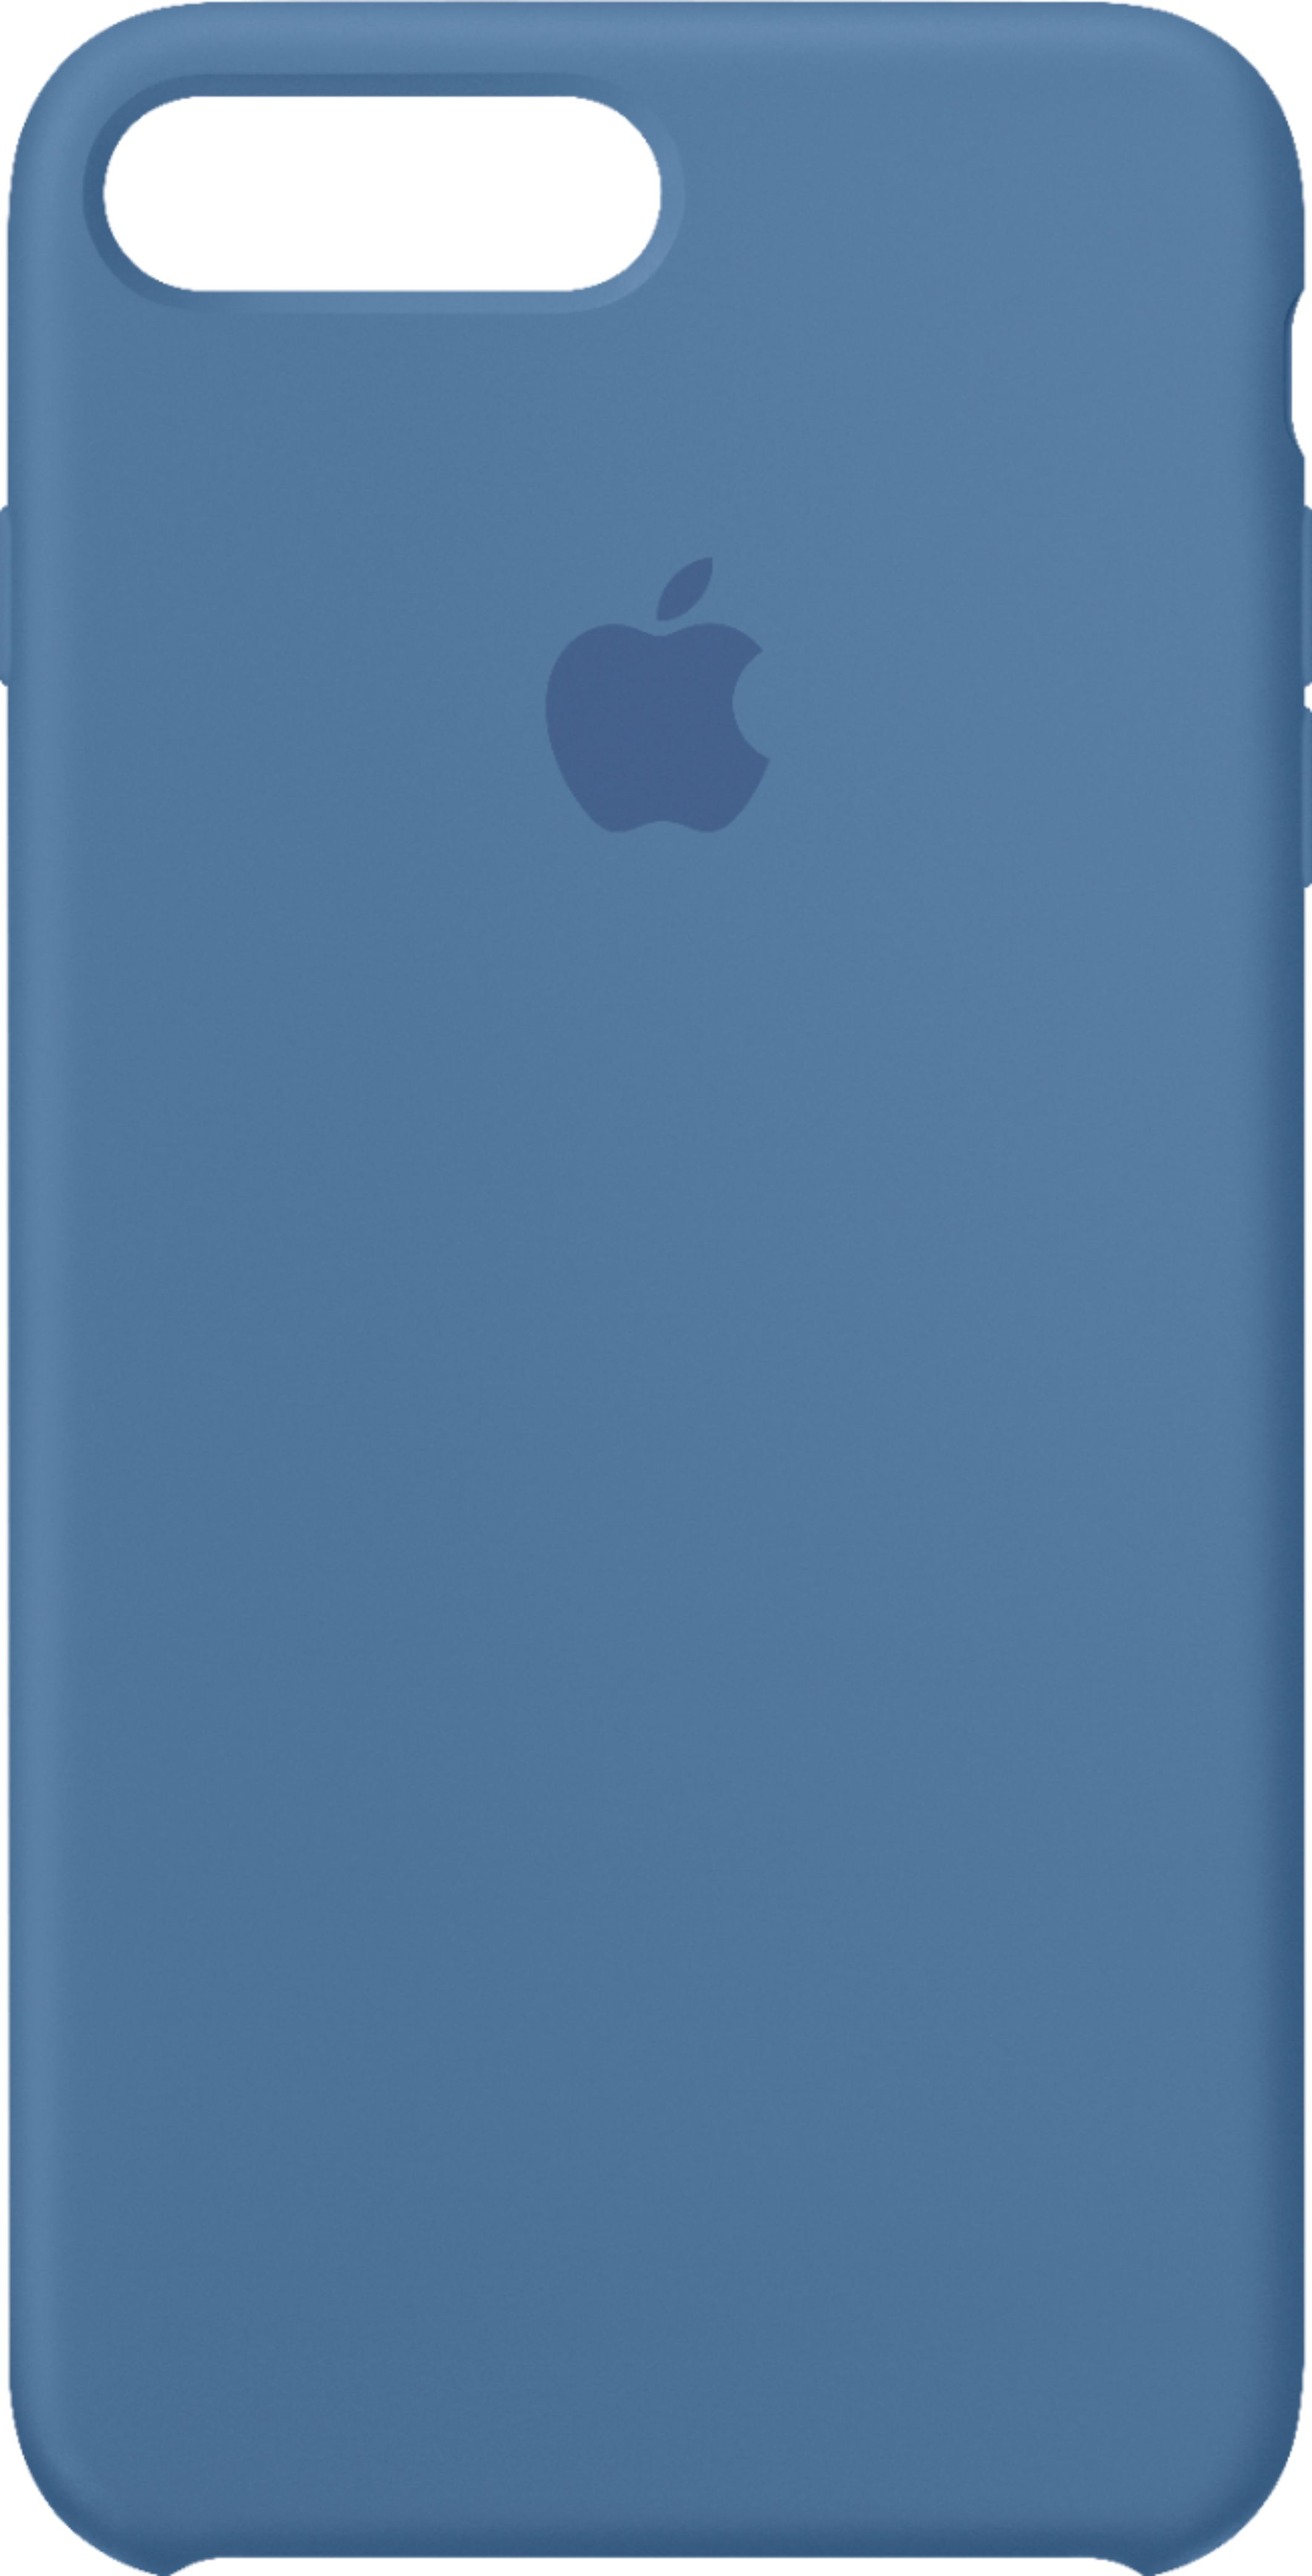 Apple iPhone® 8 Plus/7 Plus Silicone Case Denim Blue MRFX2ZM/A - Best Buy